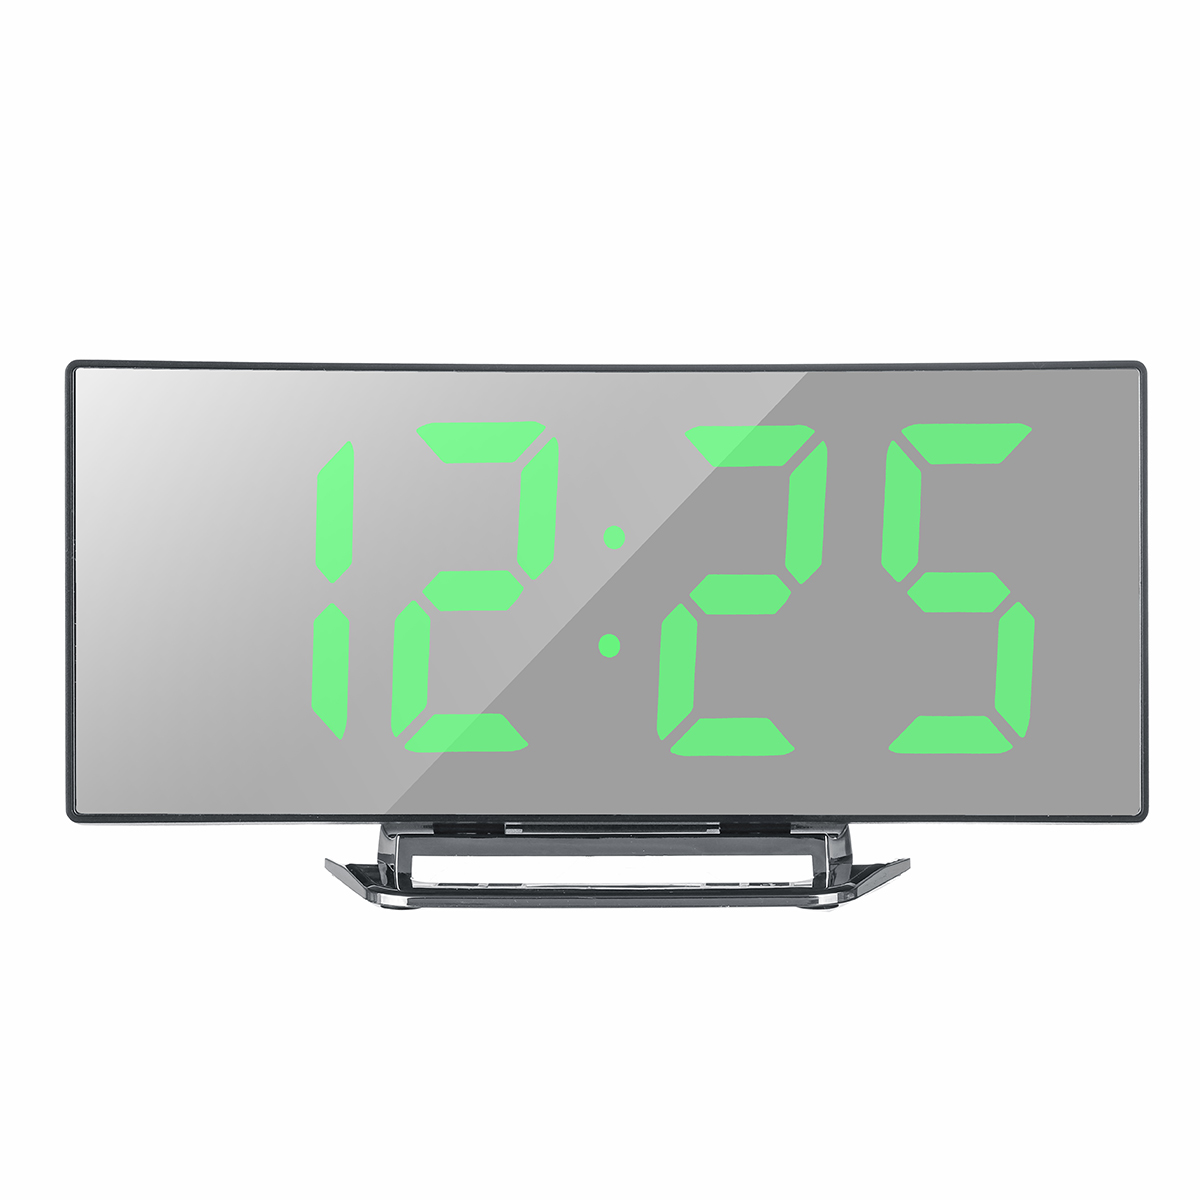 Curved-LED-Digital-Alarm-Clock-Mirror-Table-Display-Temperature-Snooze-USB-Room-1639017-10